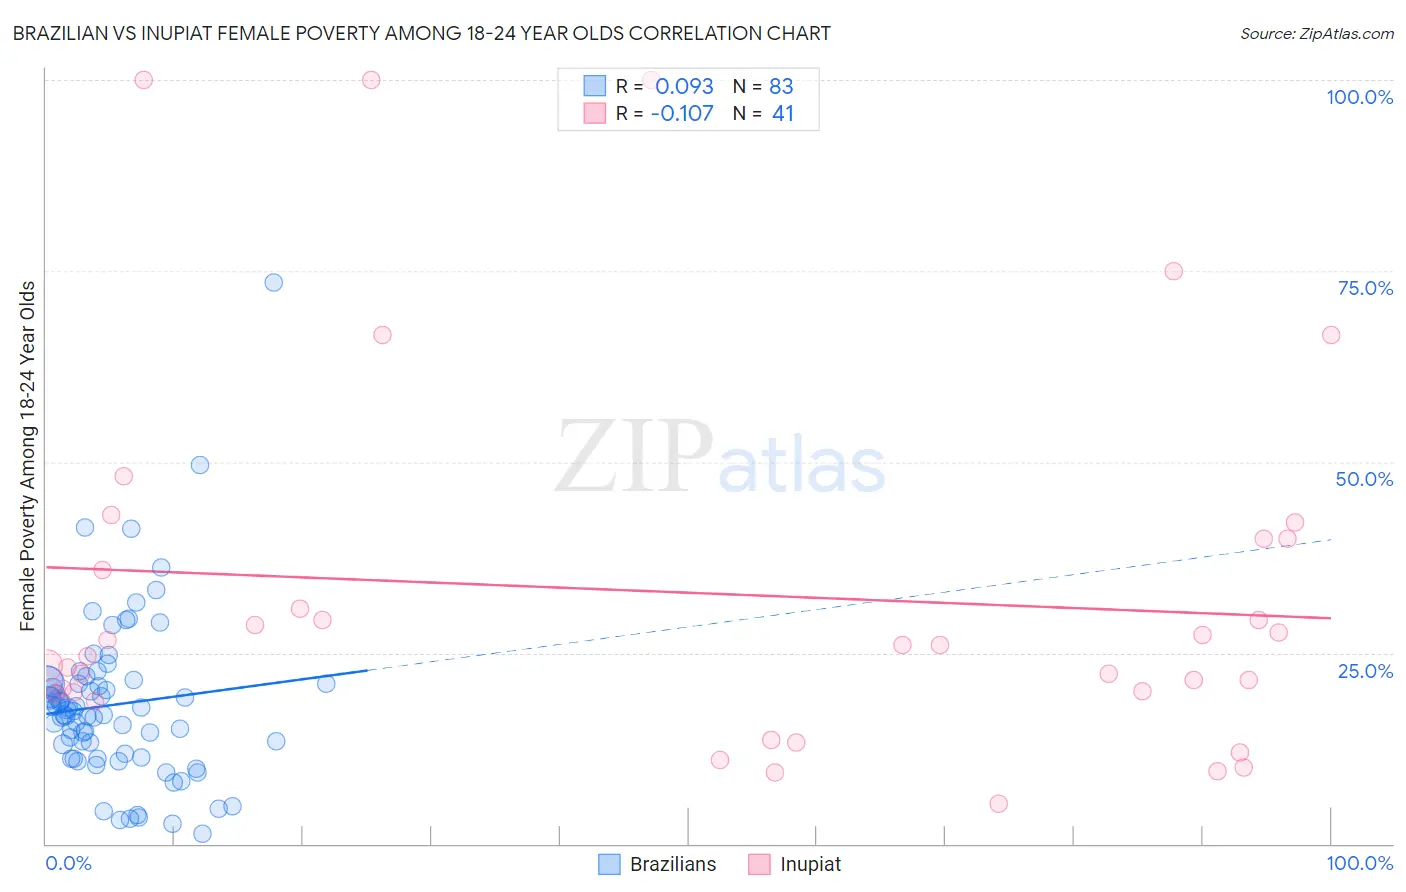 Brazilian vs Inupiat Female Poverty Among 18-24 Year Olds